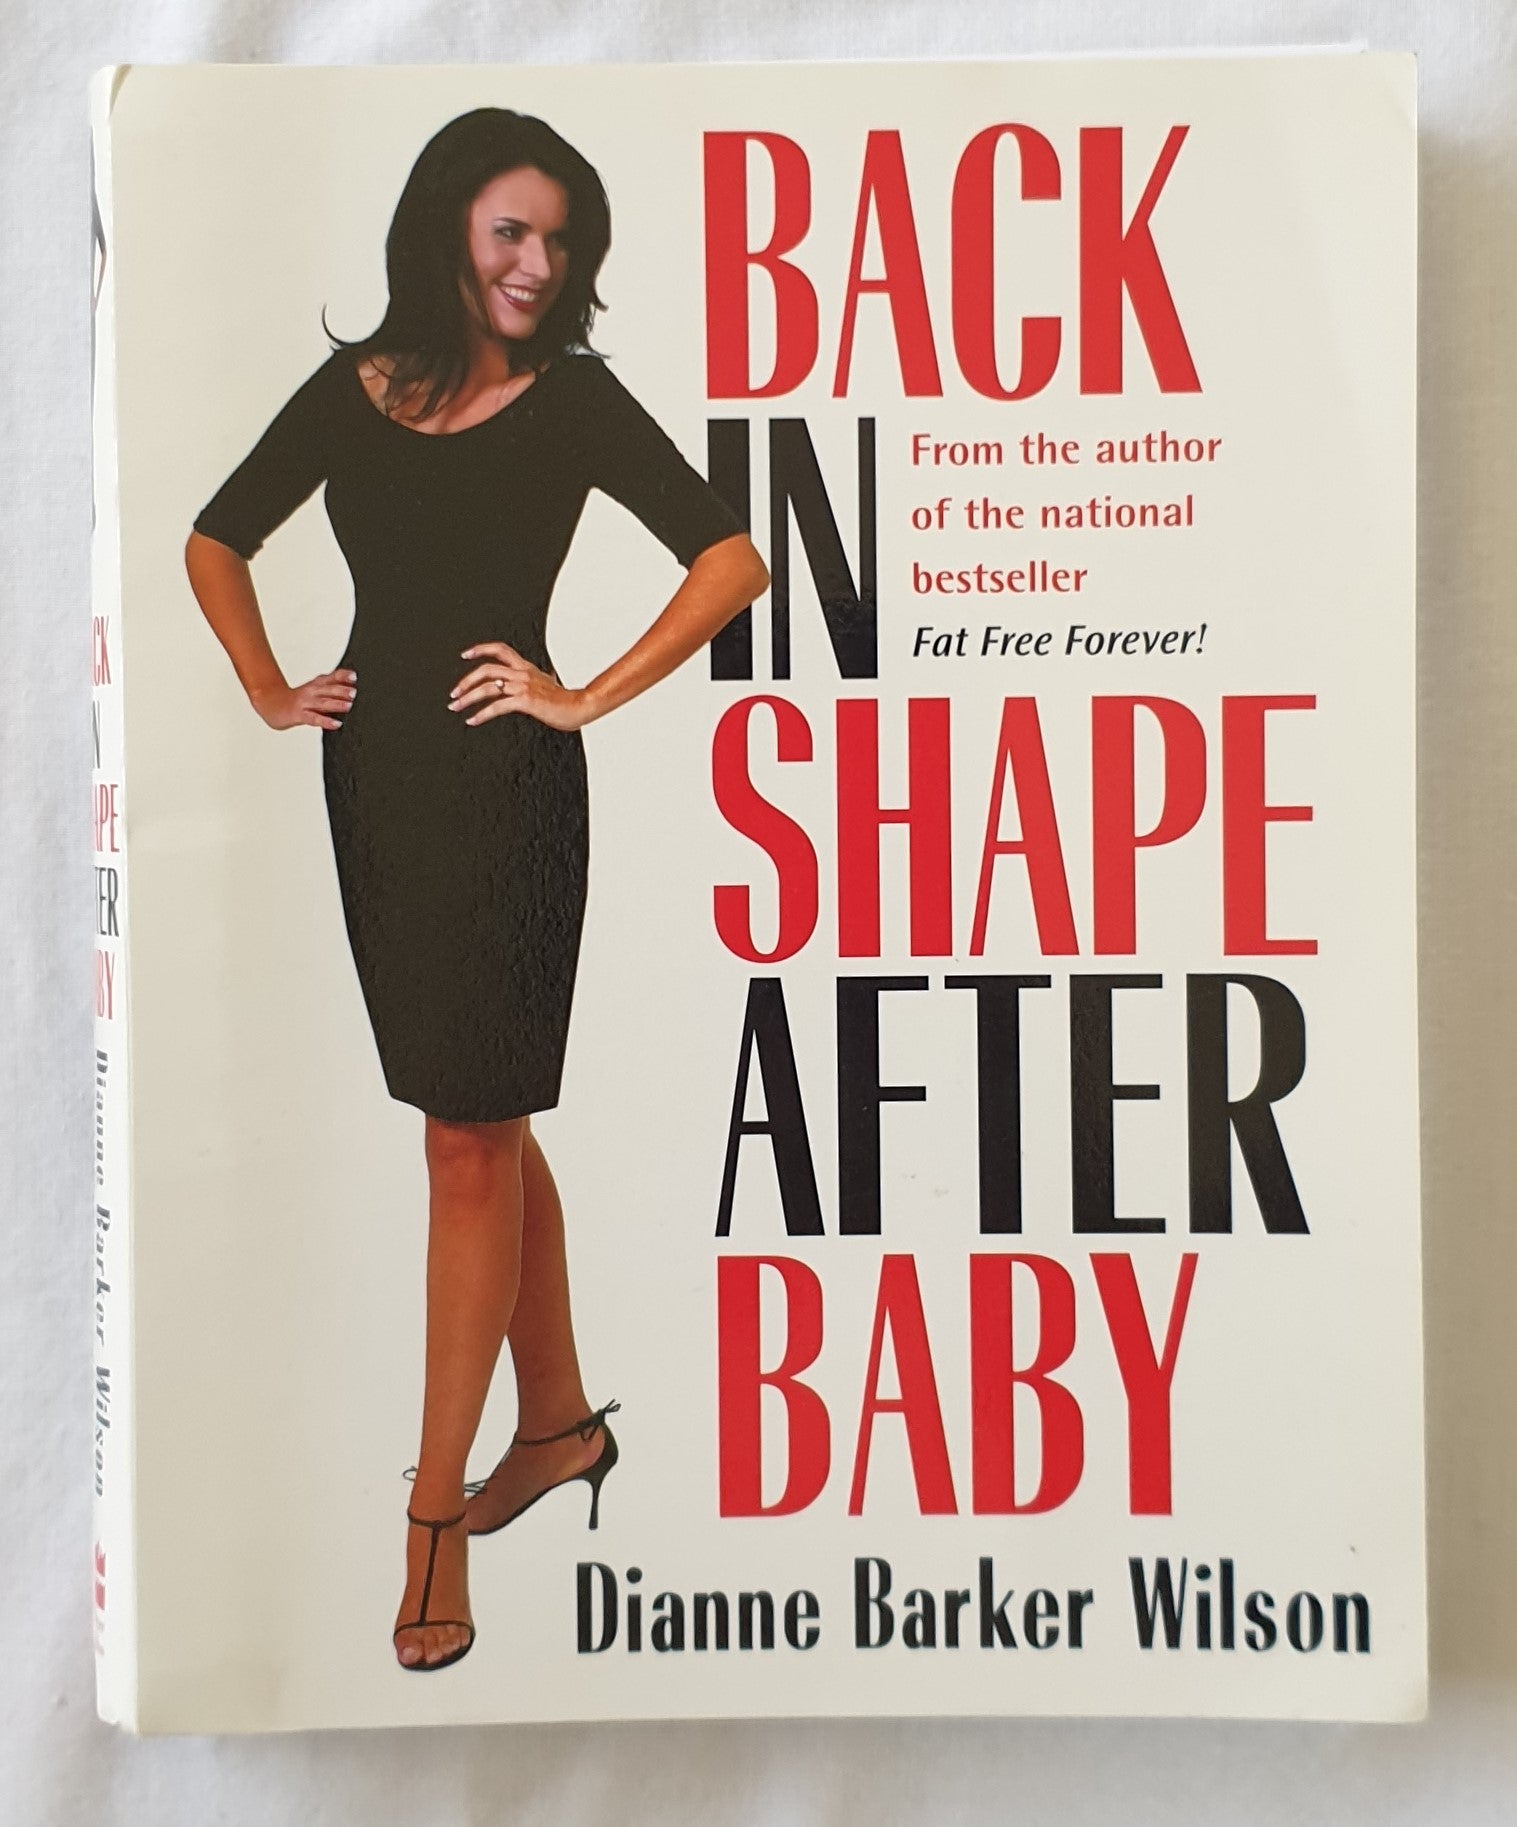 Back in Shape After Baby by Dianne Barker Wilson